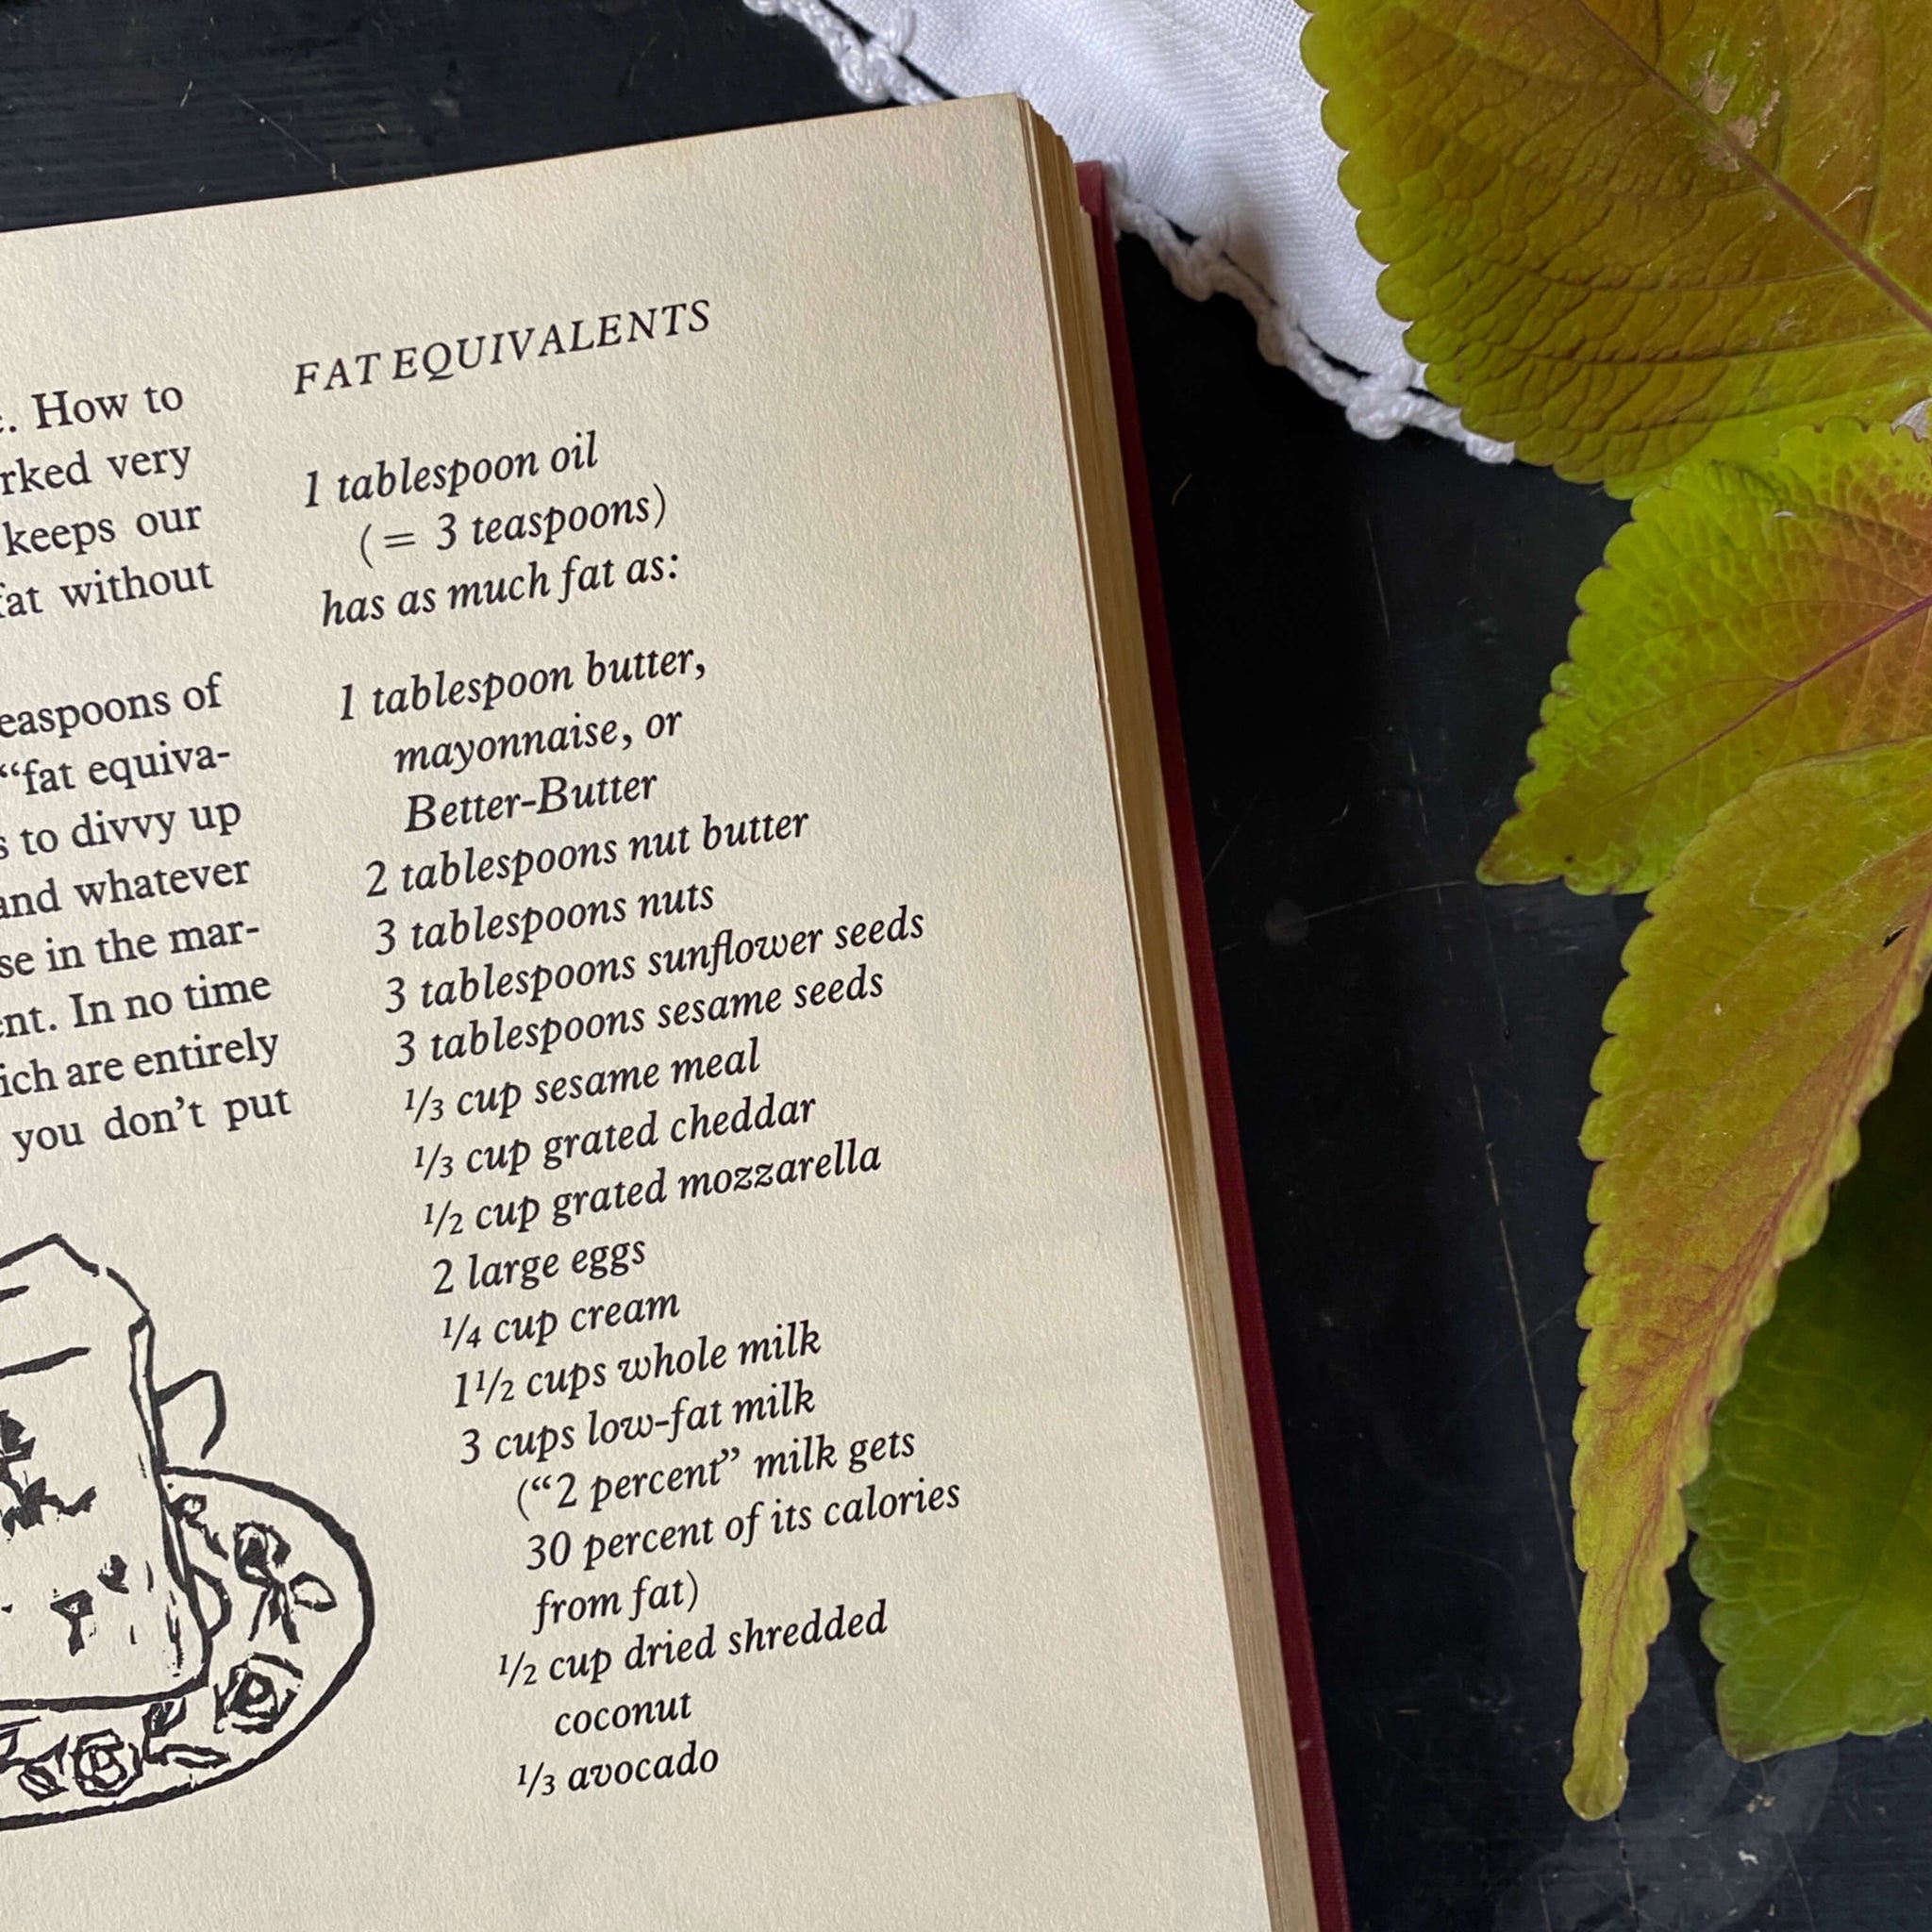 Vintage Vegetarian Cookbook - The New Laurel's Kitchen - 1986 Hardcover Edition Third Printing